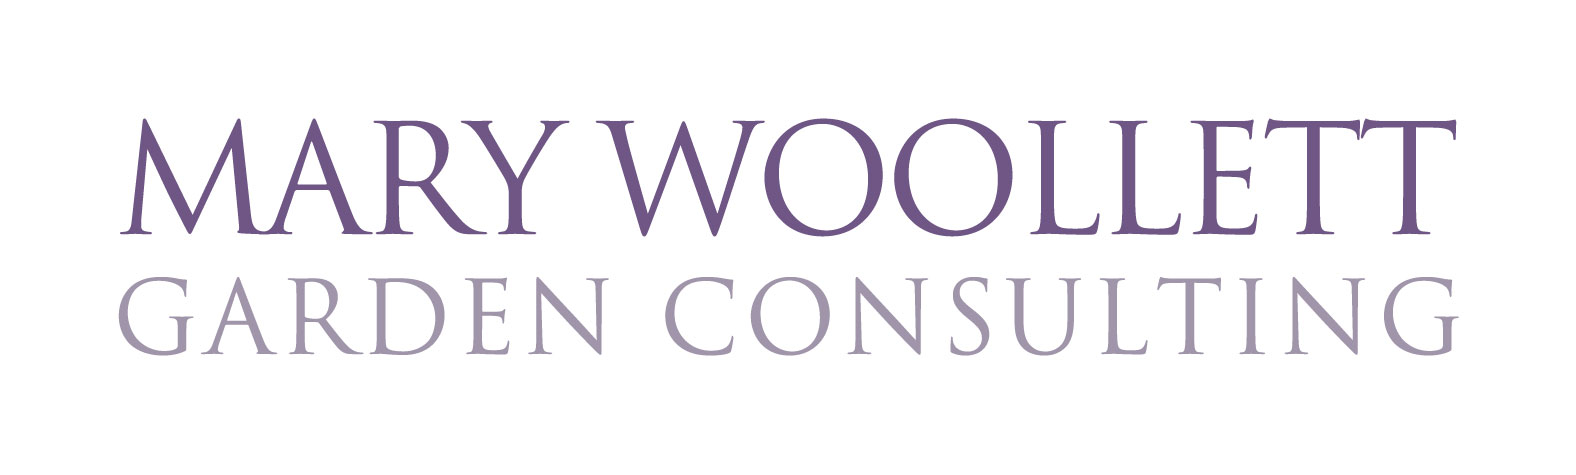 Mary Woollett Garden Consulting Logo